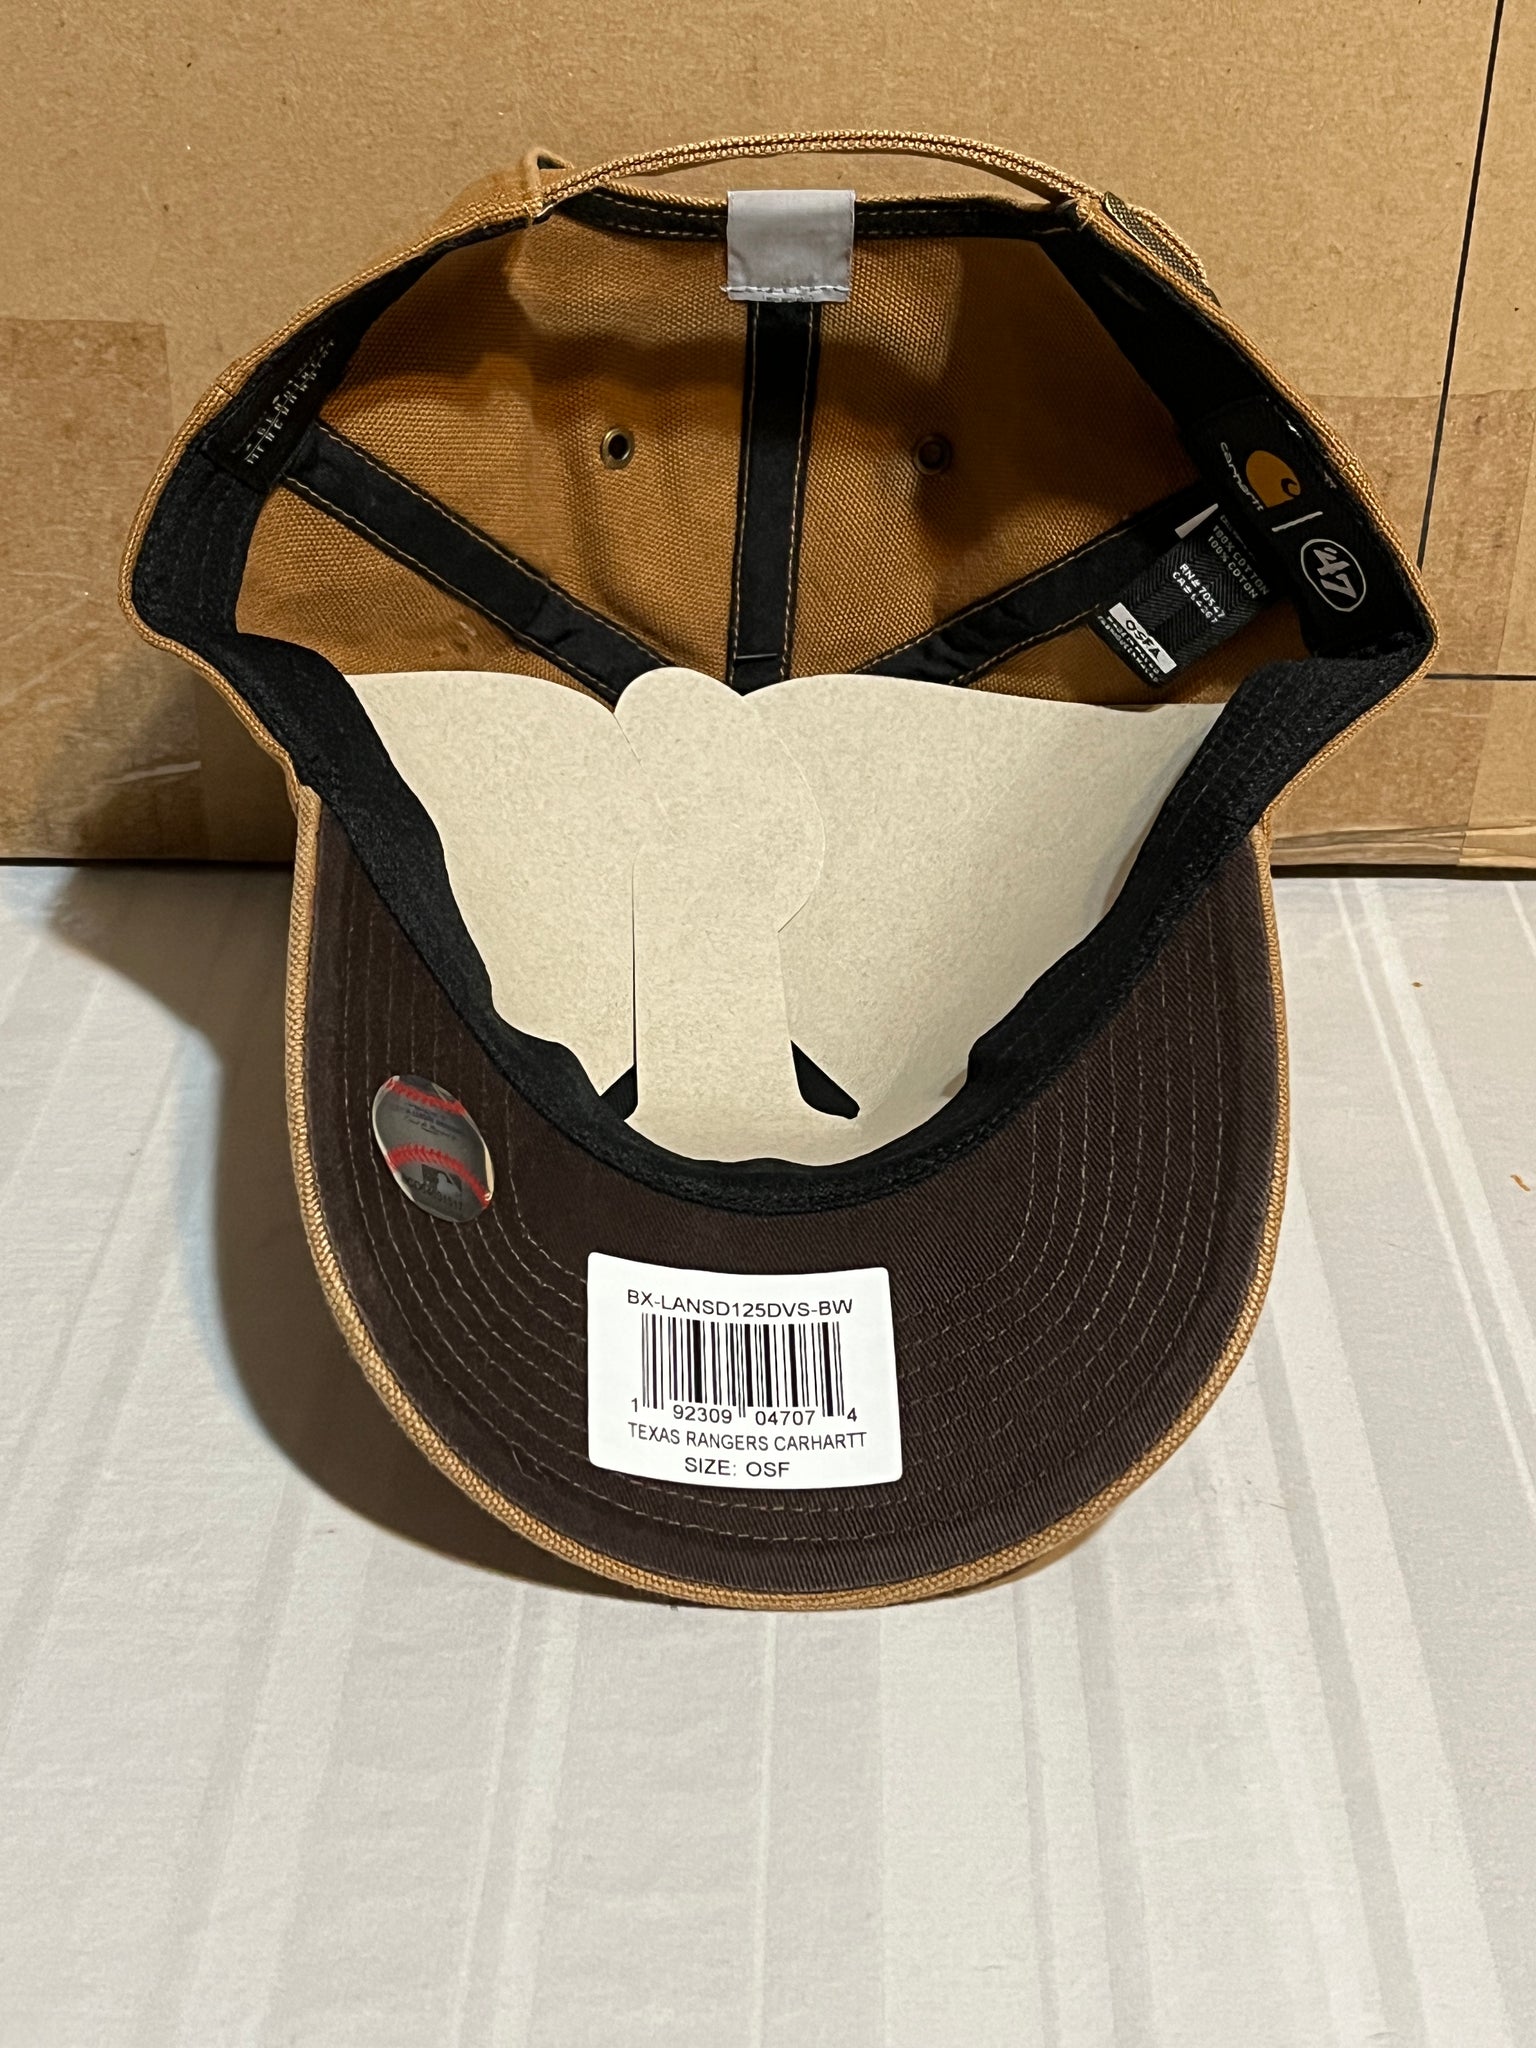 Accessories, 47 Brand Carhartt Texas Rangers Hat